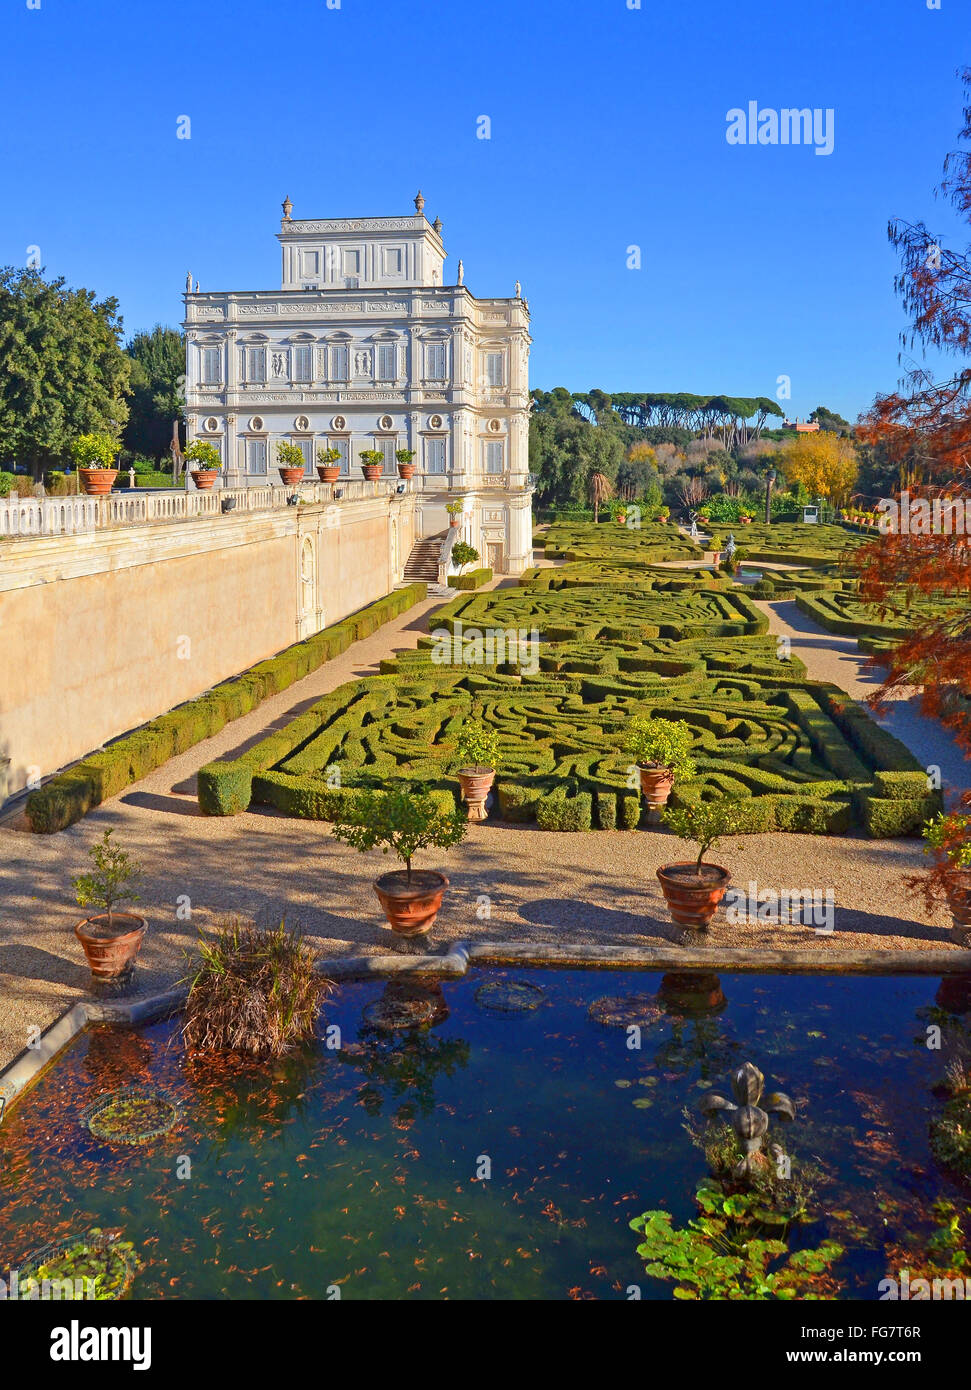 villa pamphili and italian garden in rome Stock Photo